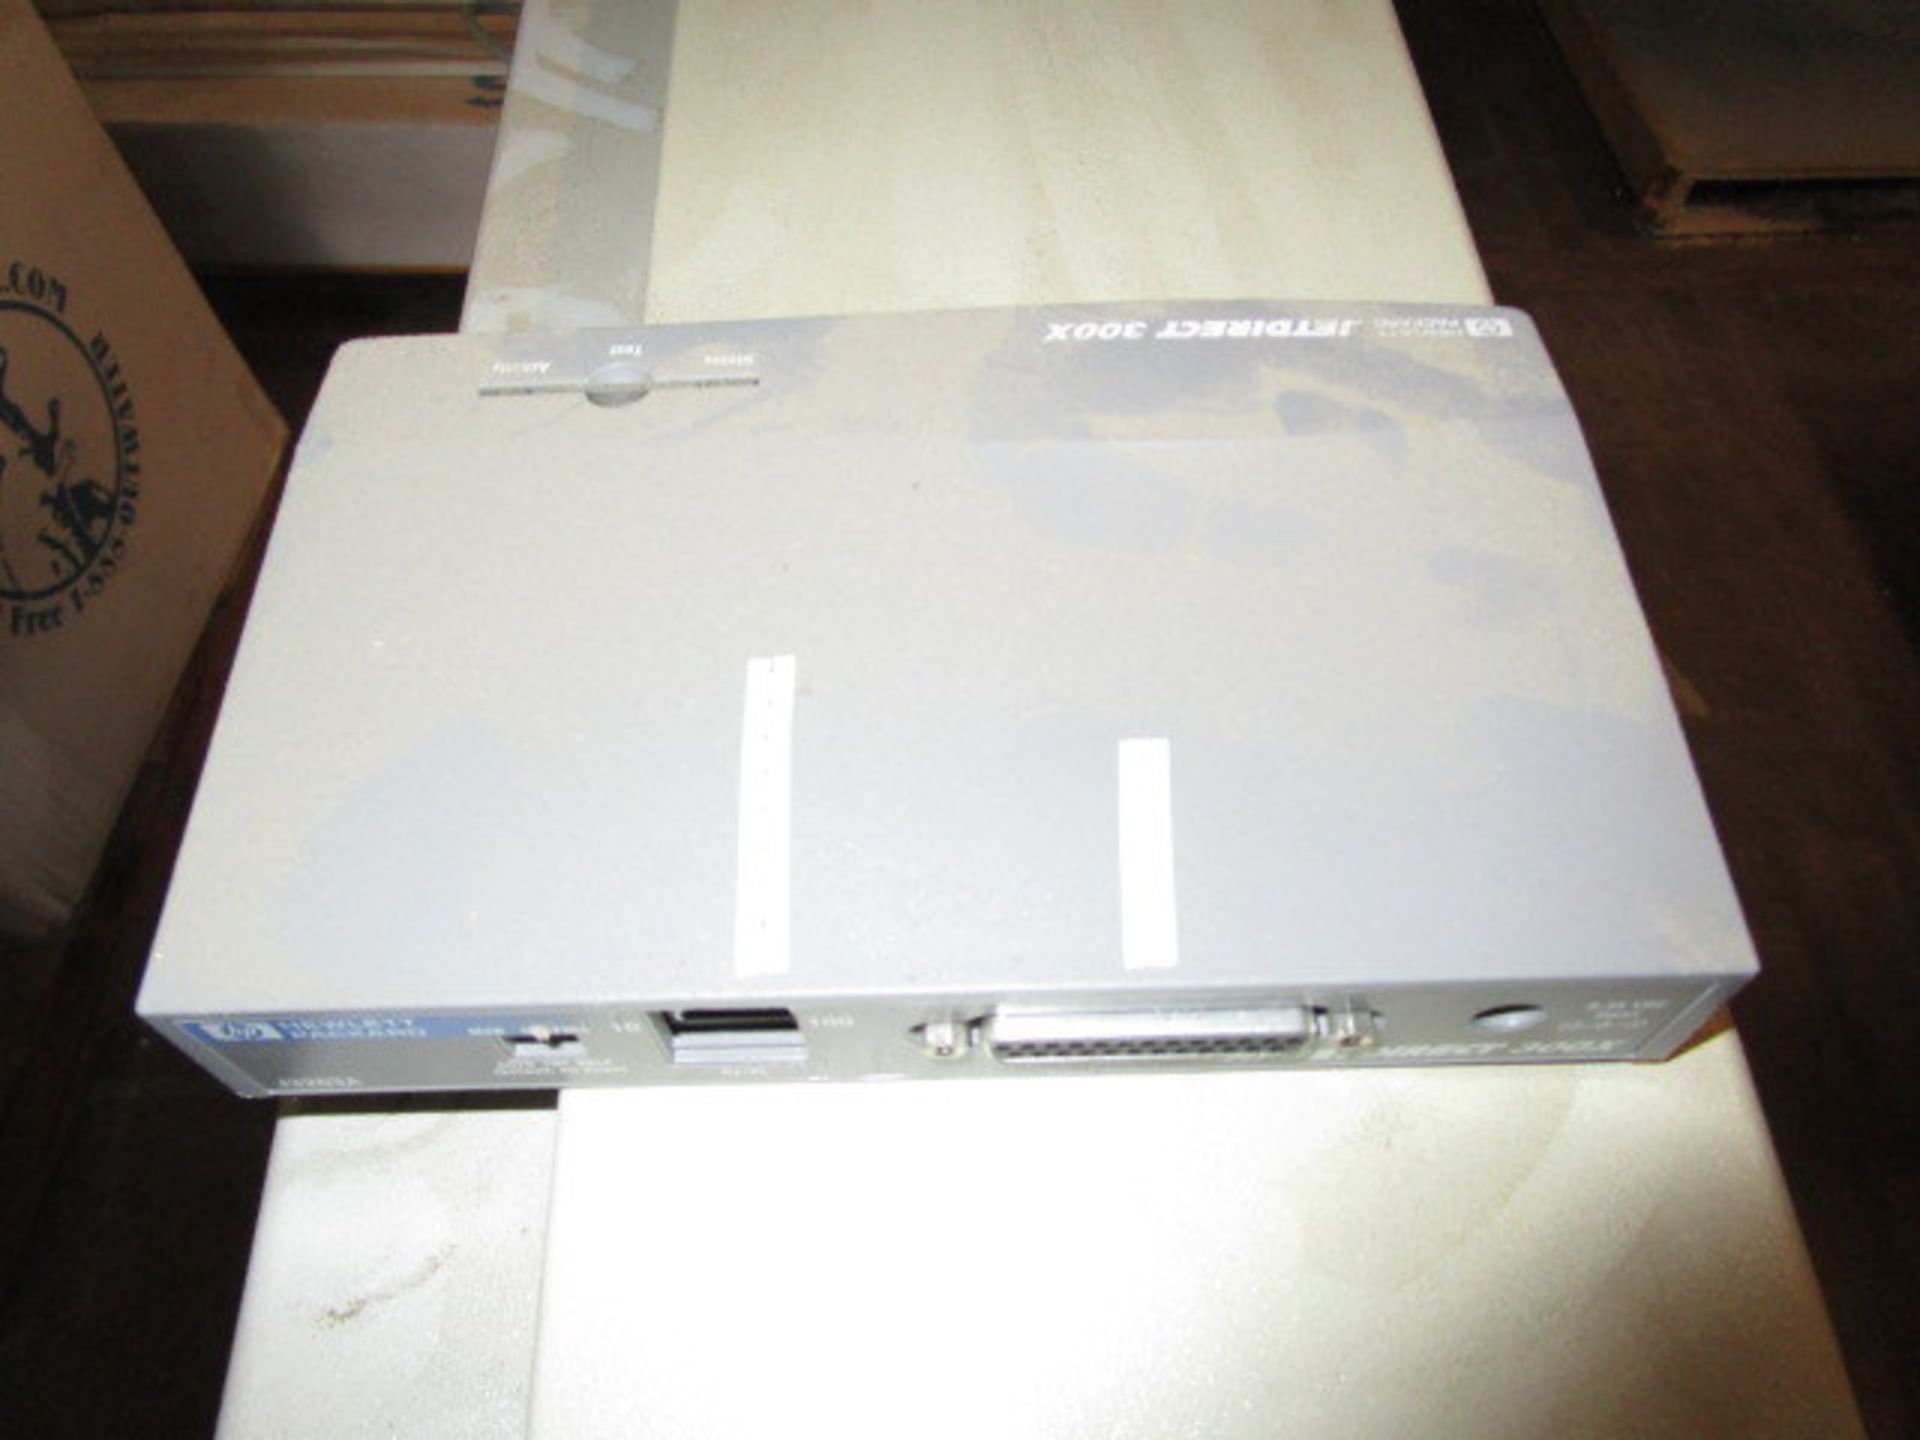 Hewlett Packard Design, 450C Large Format Printer, Model: C4715A, SN: SG06K11052 Printer, Model: - Image 5 of 5